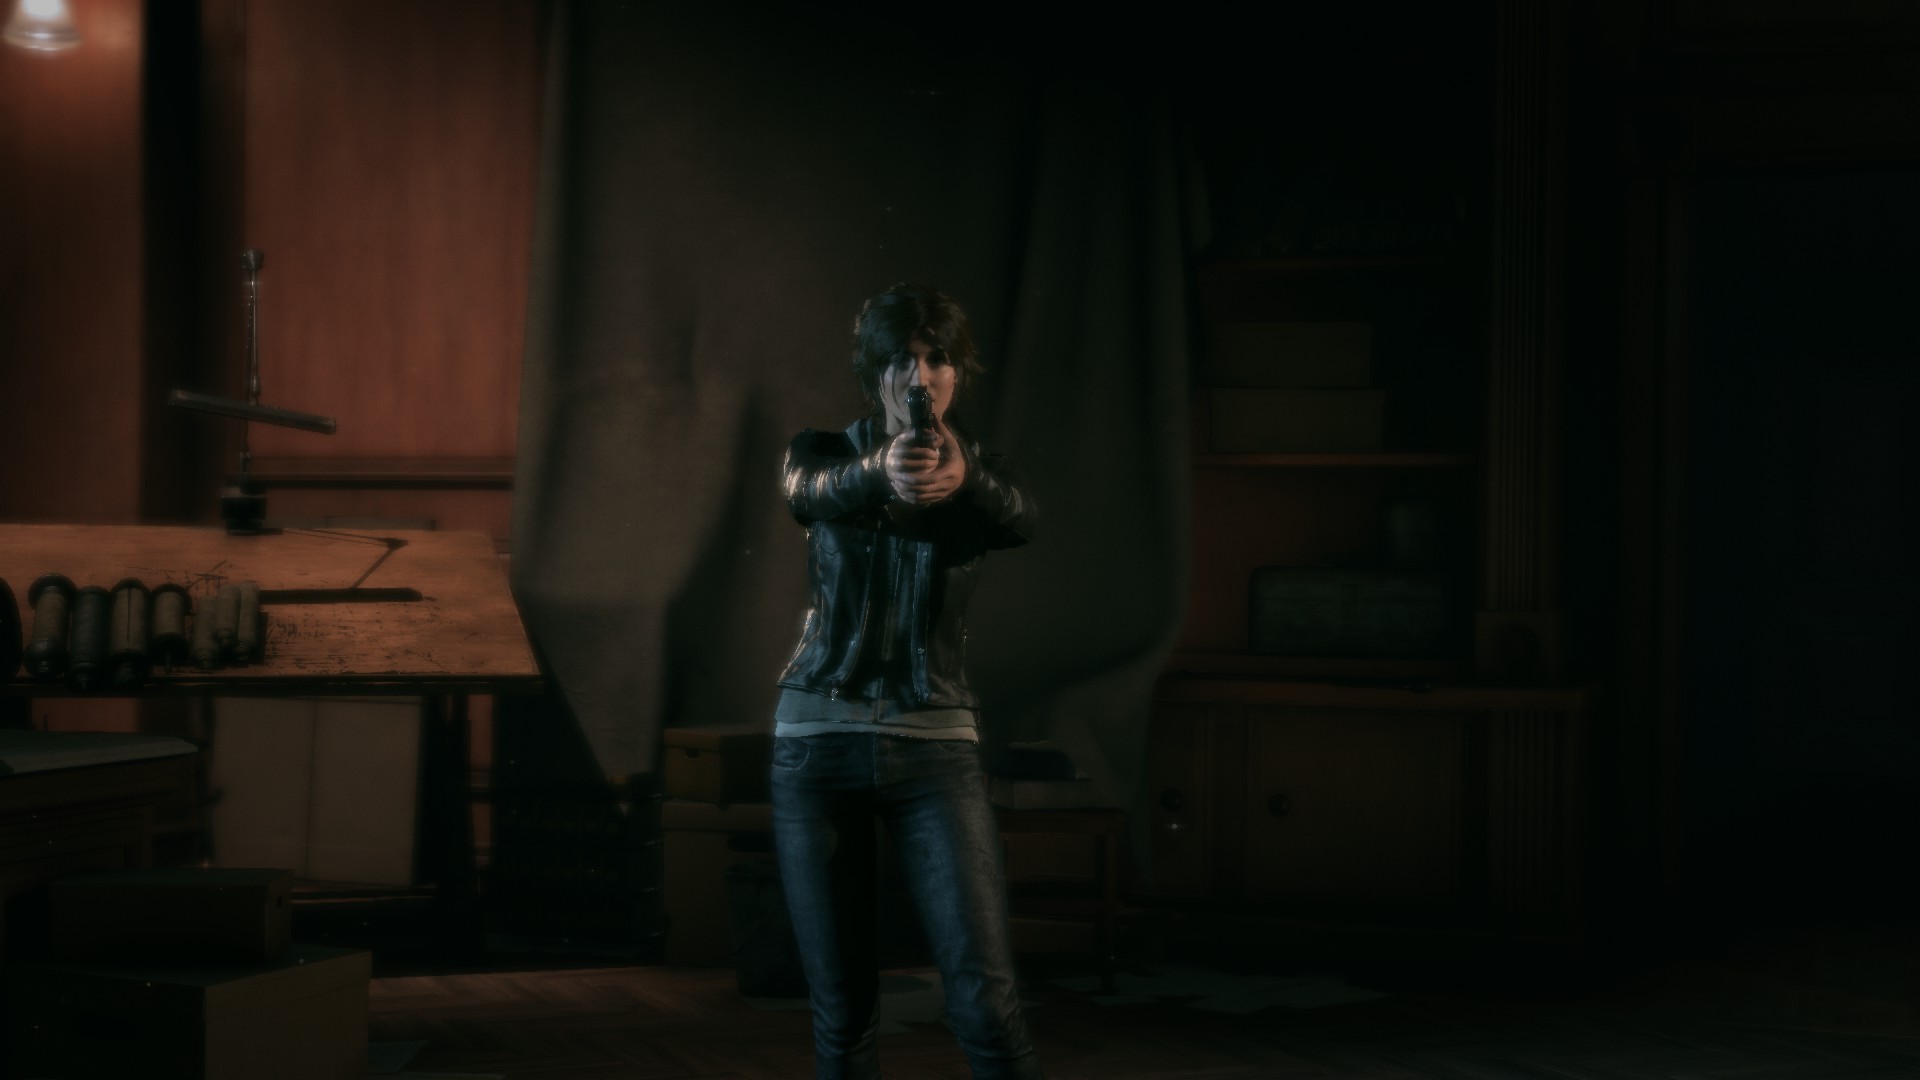 Rise Of The Tomb Raider Lara Croft Aiming Dark Night Looking At Viewer Girls With Guns Dangerous Vid 1920x1080